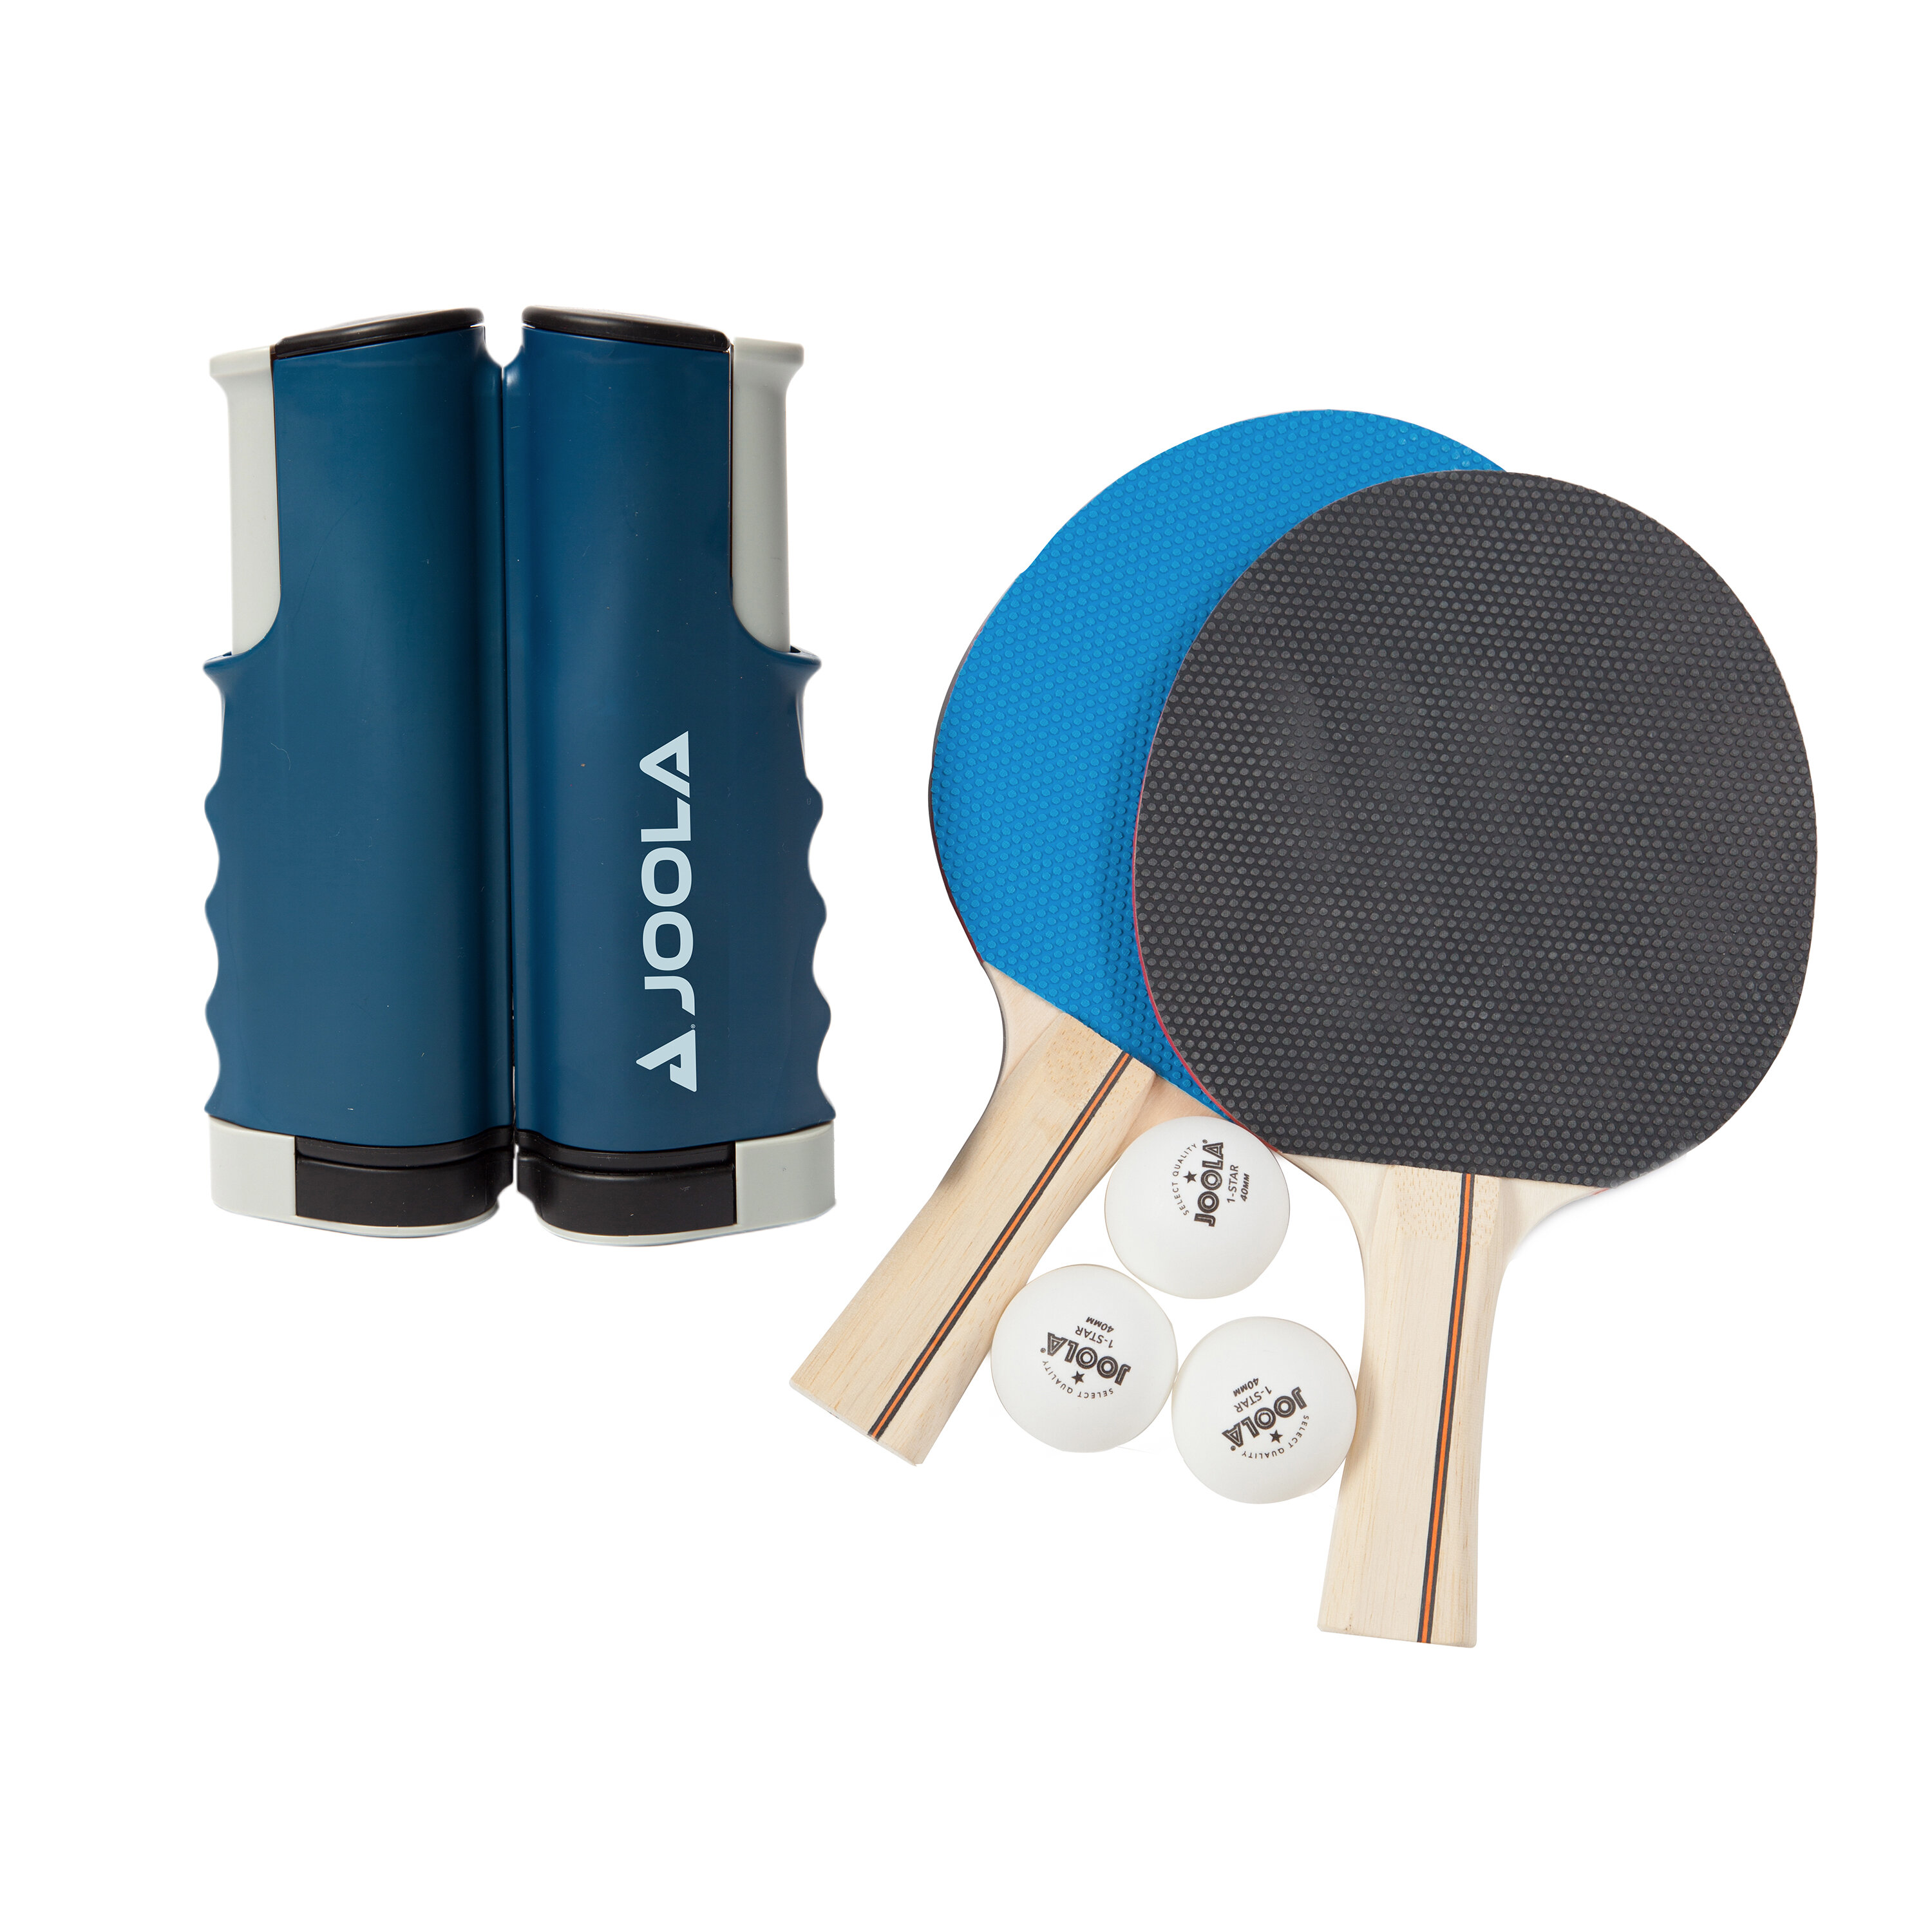 JOOLA Essentials Table Tennis Net Set Reviews and | & Wayfair Racket